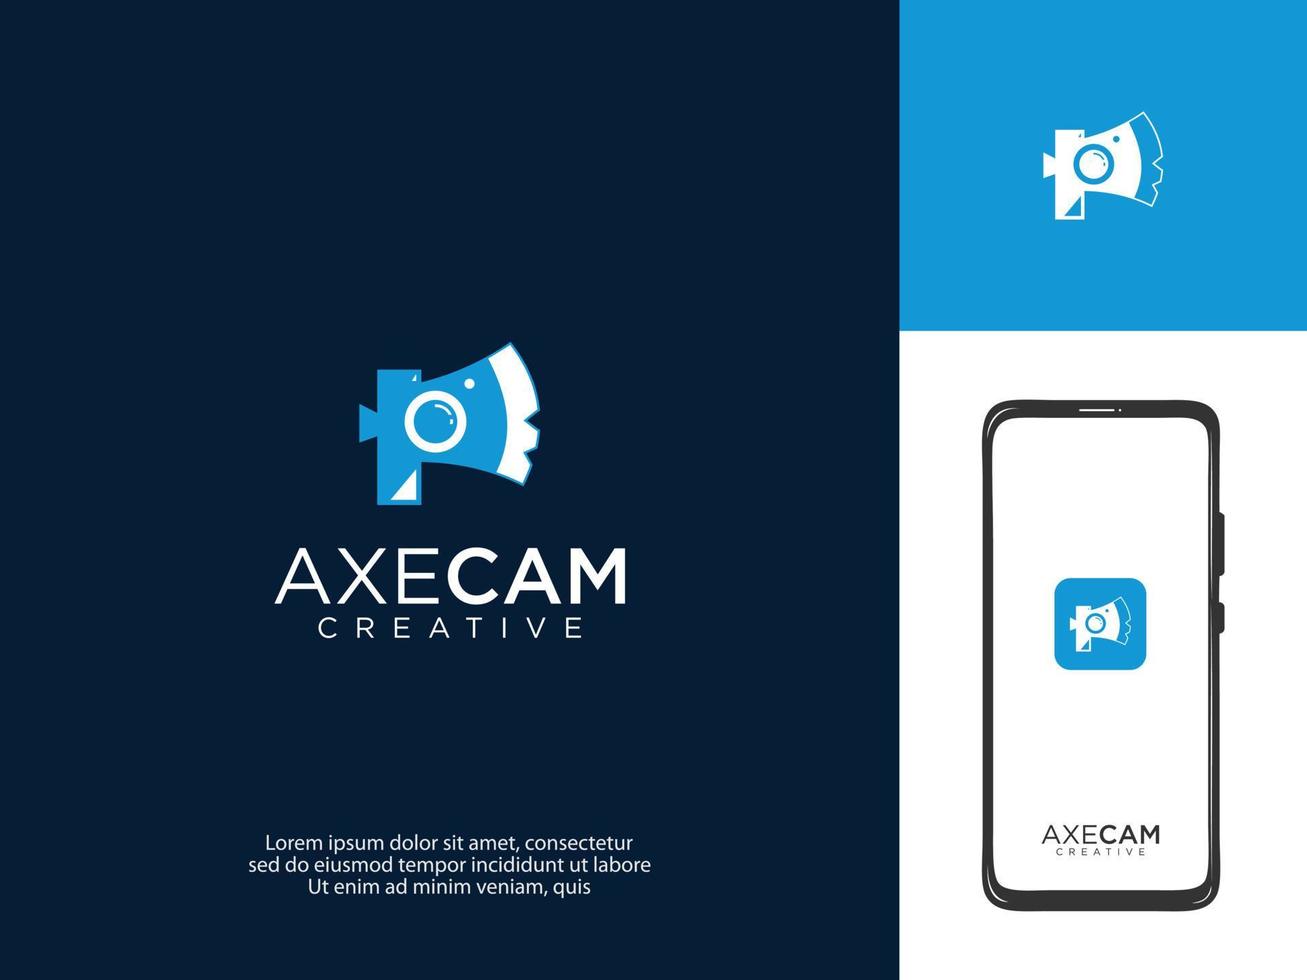 Axe photography logo Design Vector Stock Template. camera Mobile phone application with axe logo illustration with smartphone